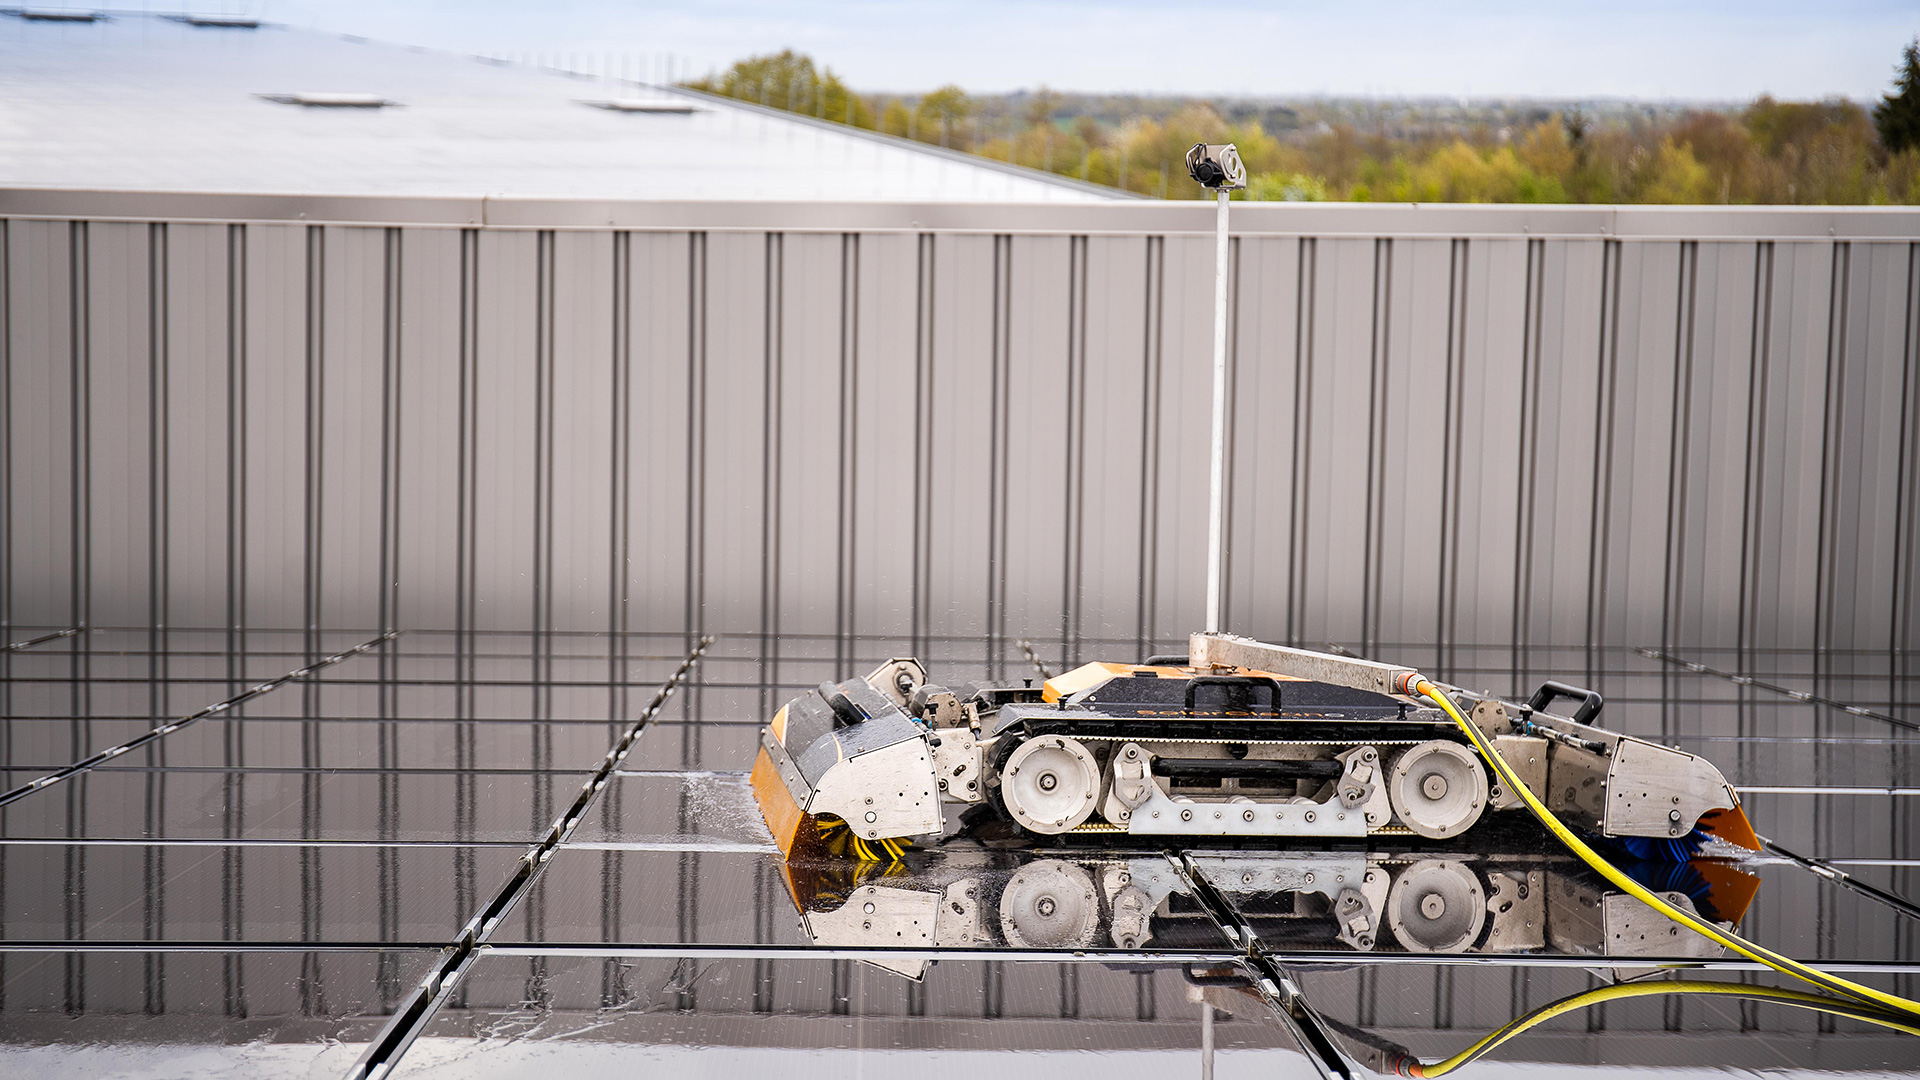 robot solar panel cleaner wet cleaning on fragile panels